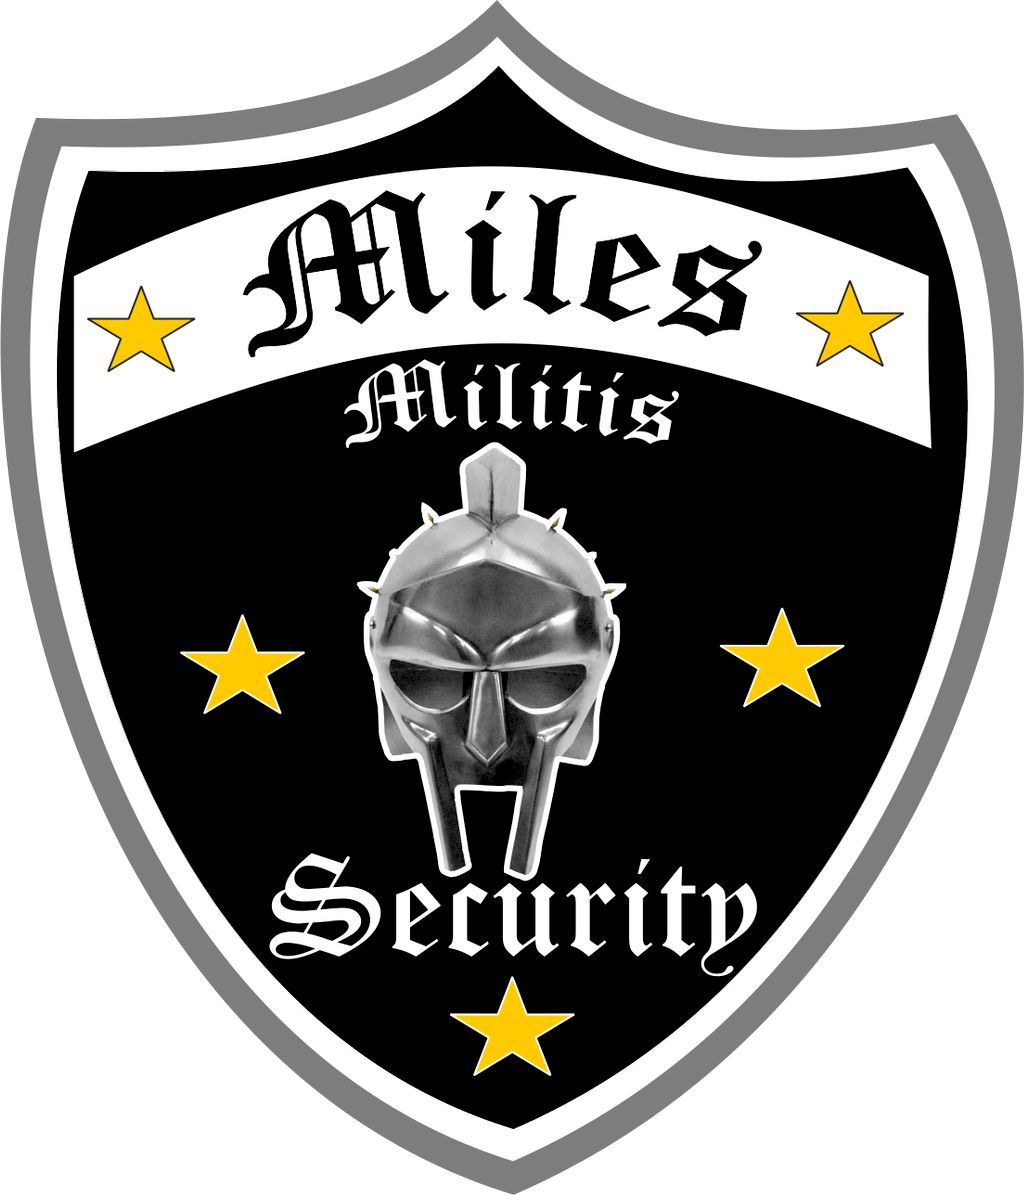 Miles Security